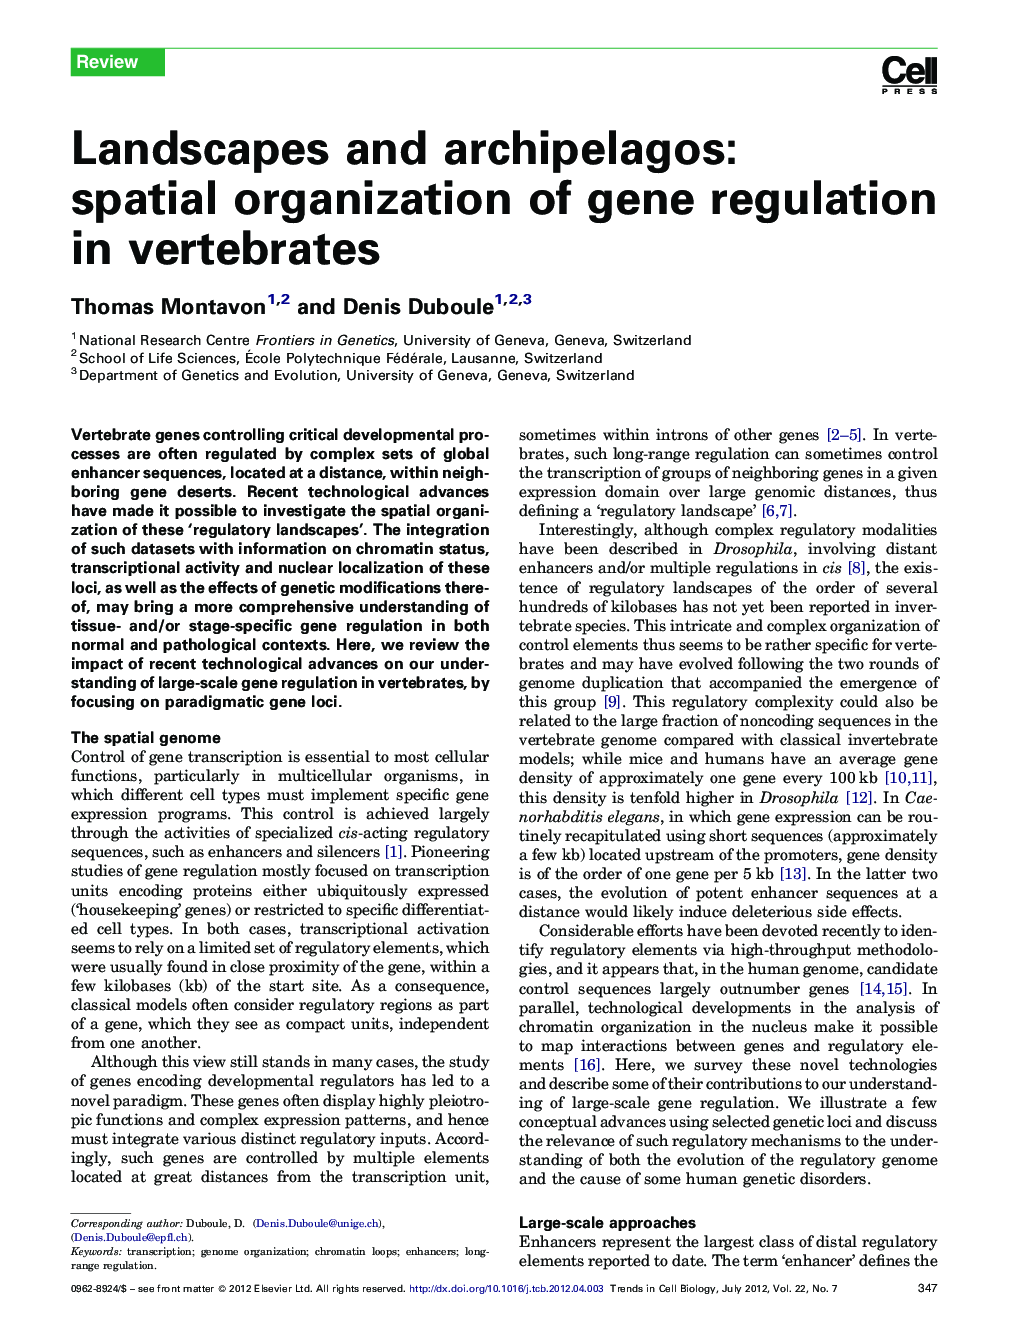 Landscapes and archipelagos: spatial organization of gene regulation in vertebrates